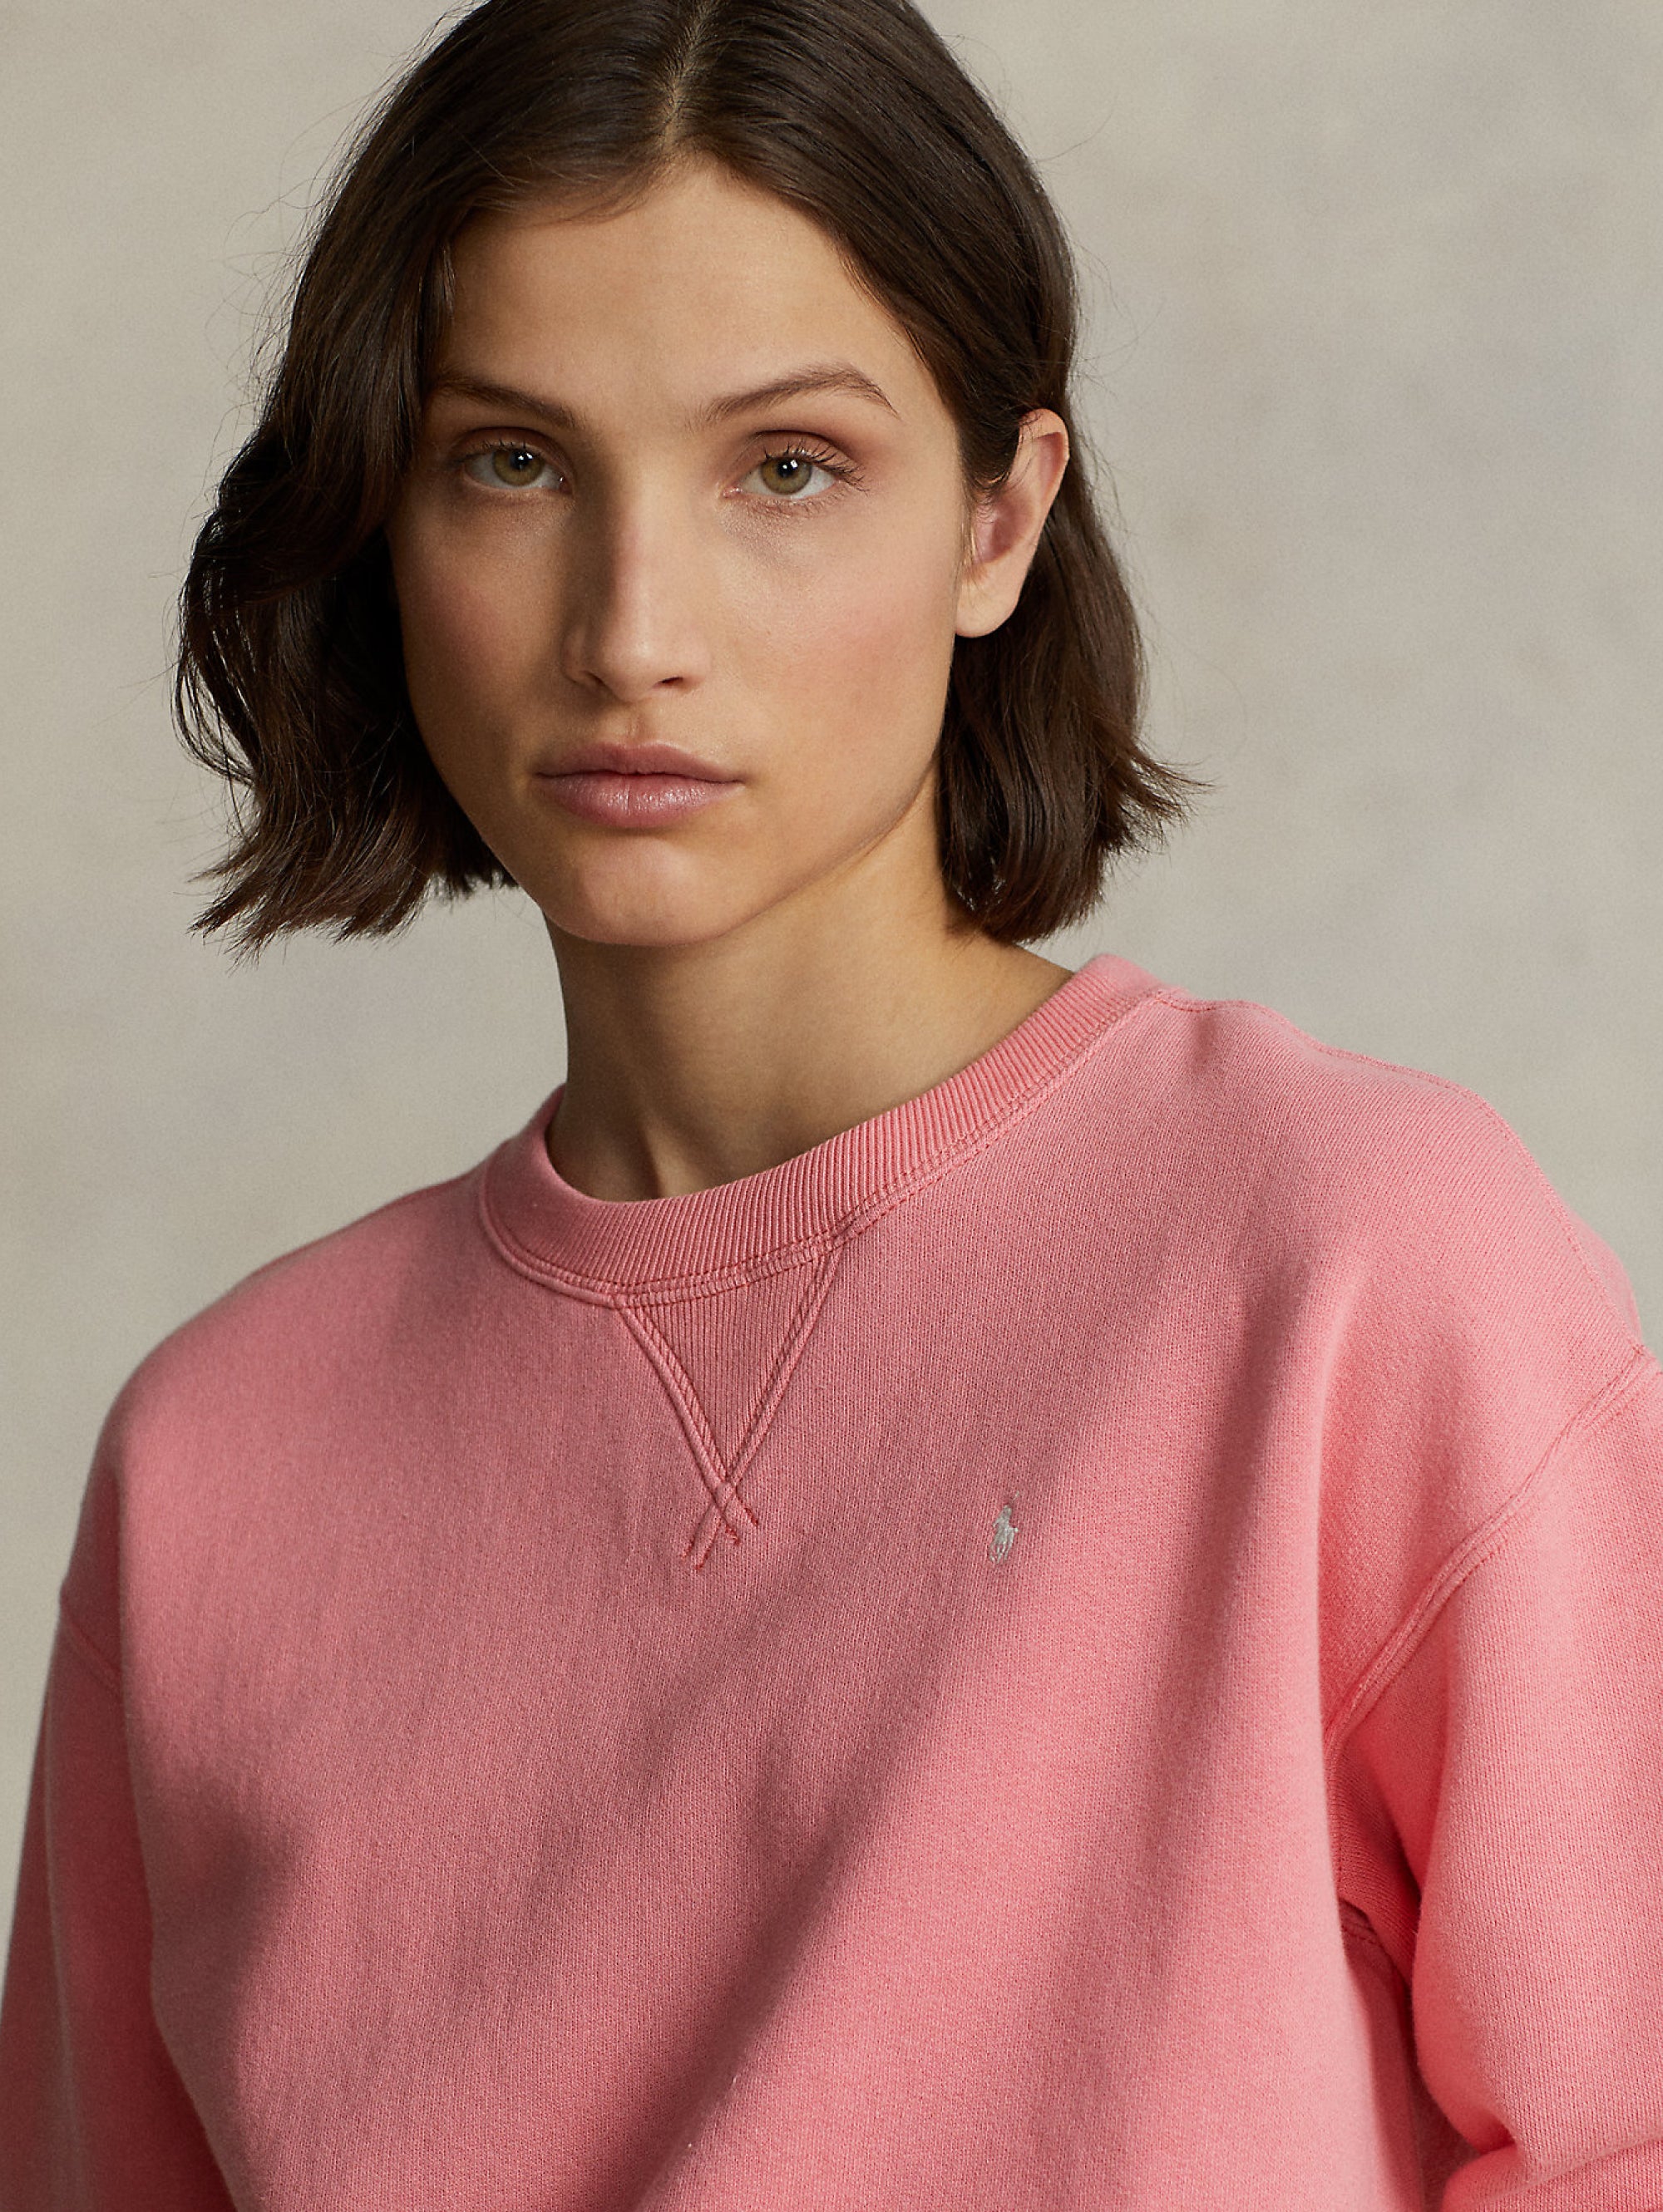 Süßes rosa Rundhals-Sweatshirt